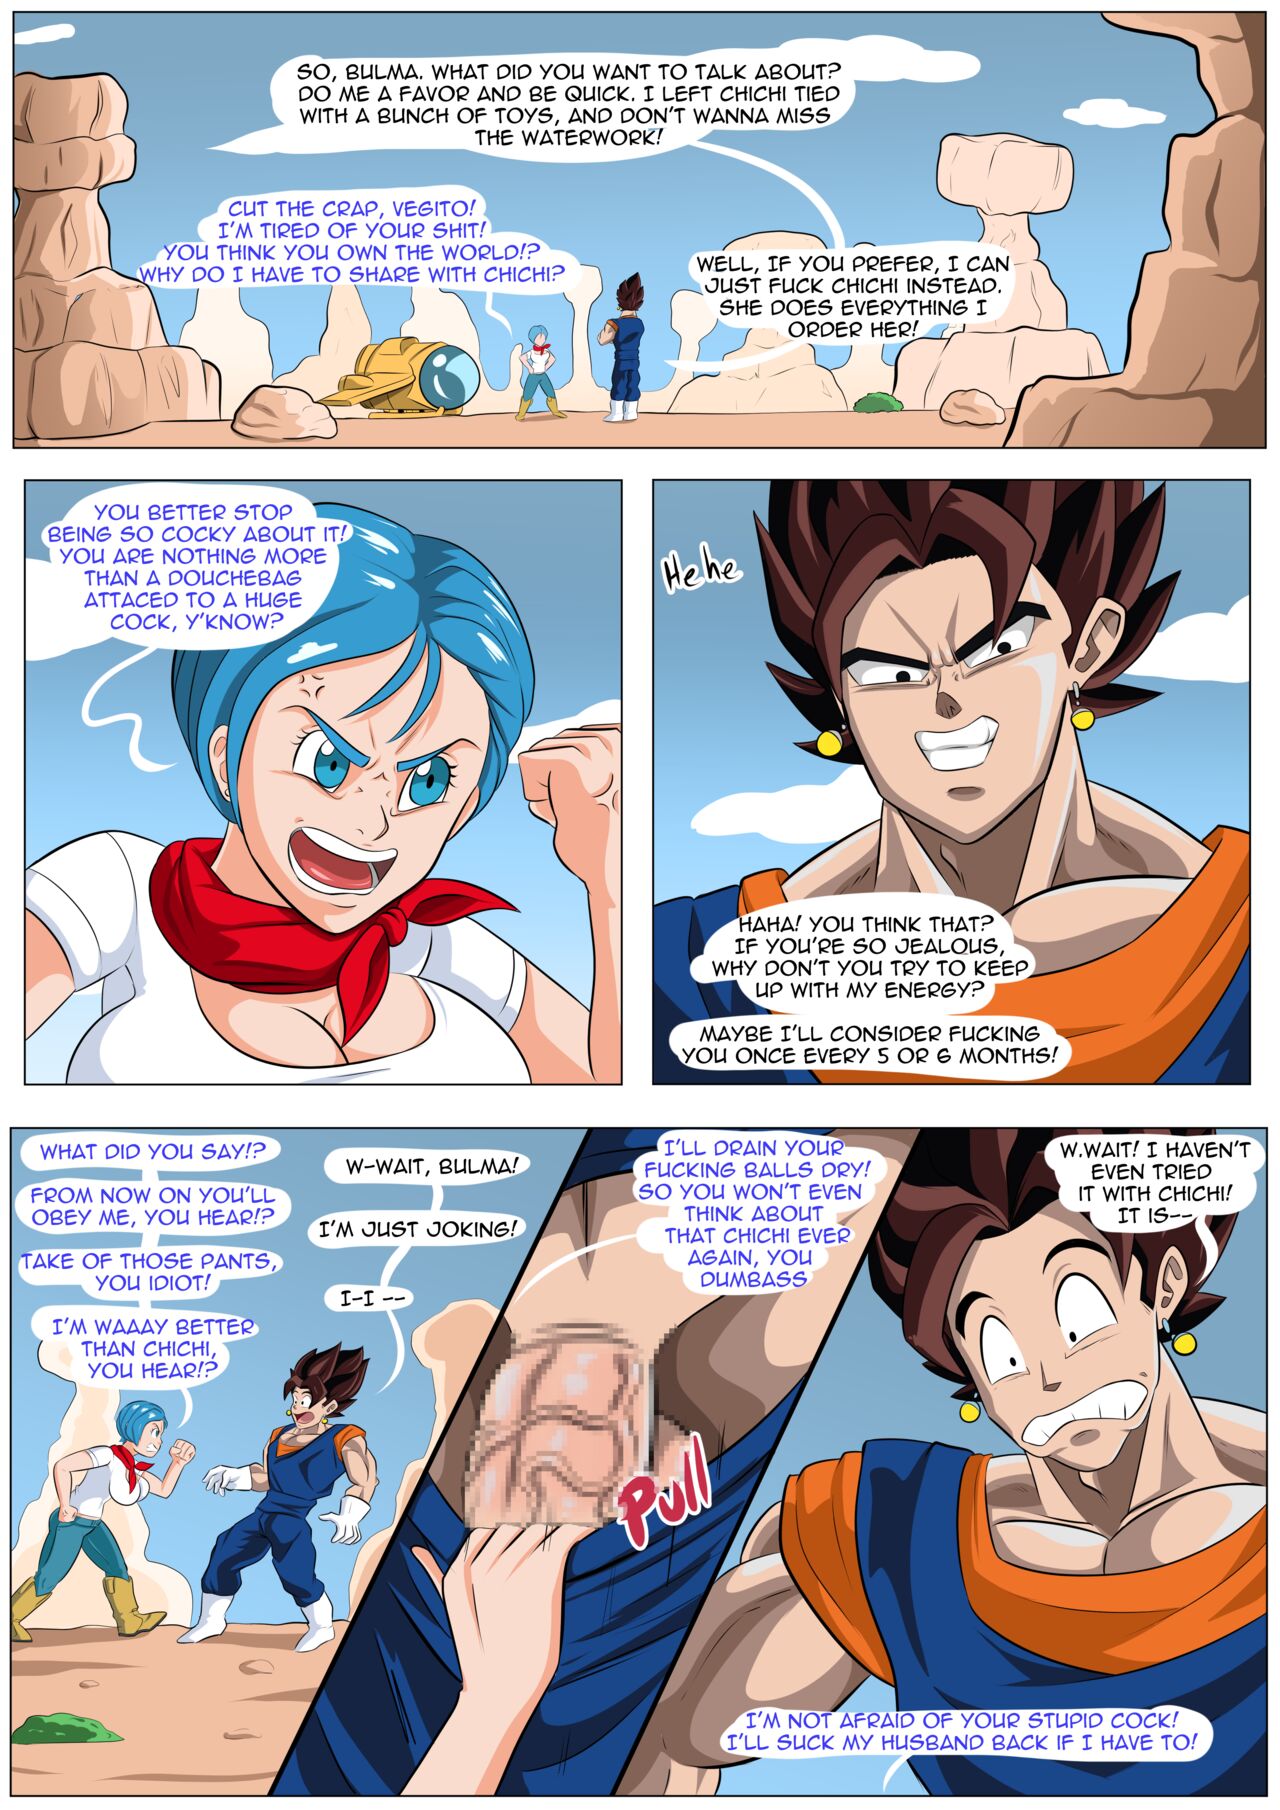 Bulmas Special Attack – Dragon Ball Super [Mr.Moudan]